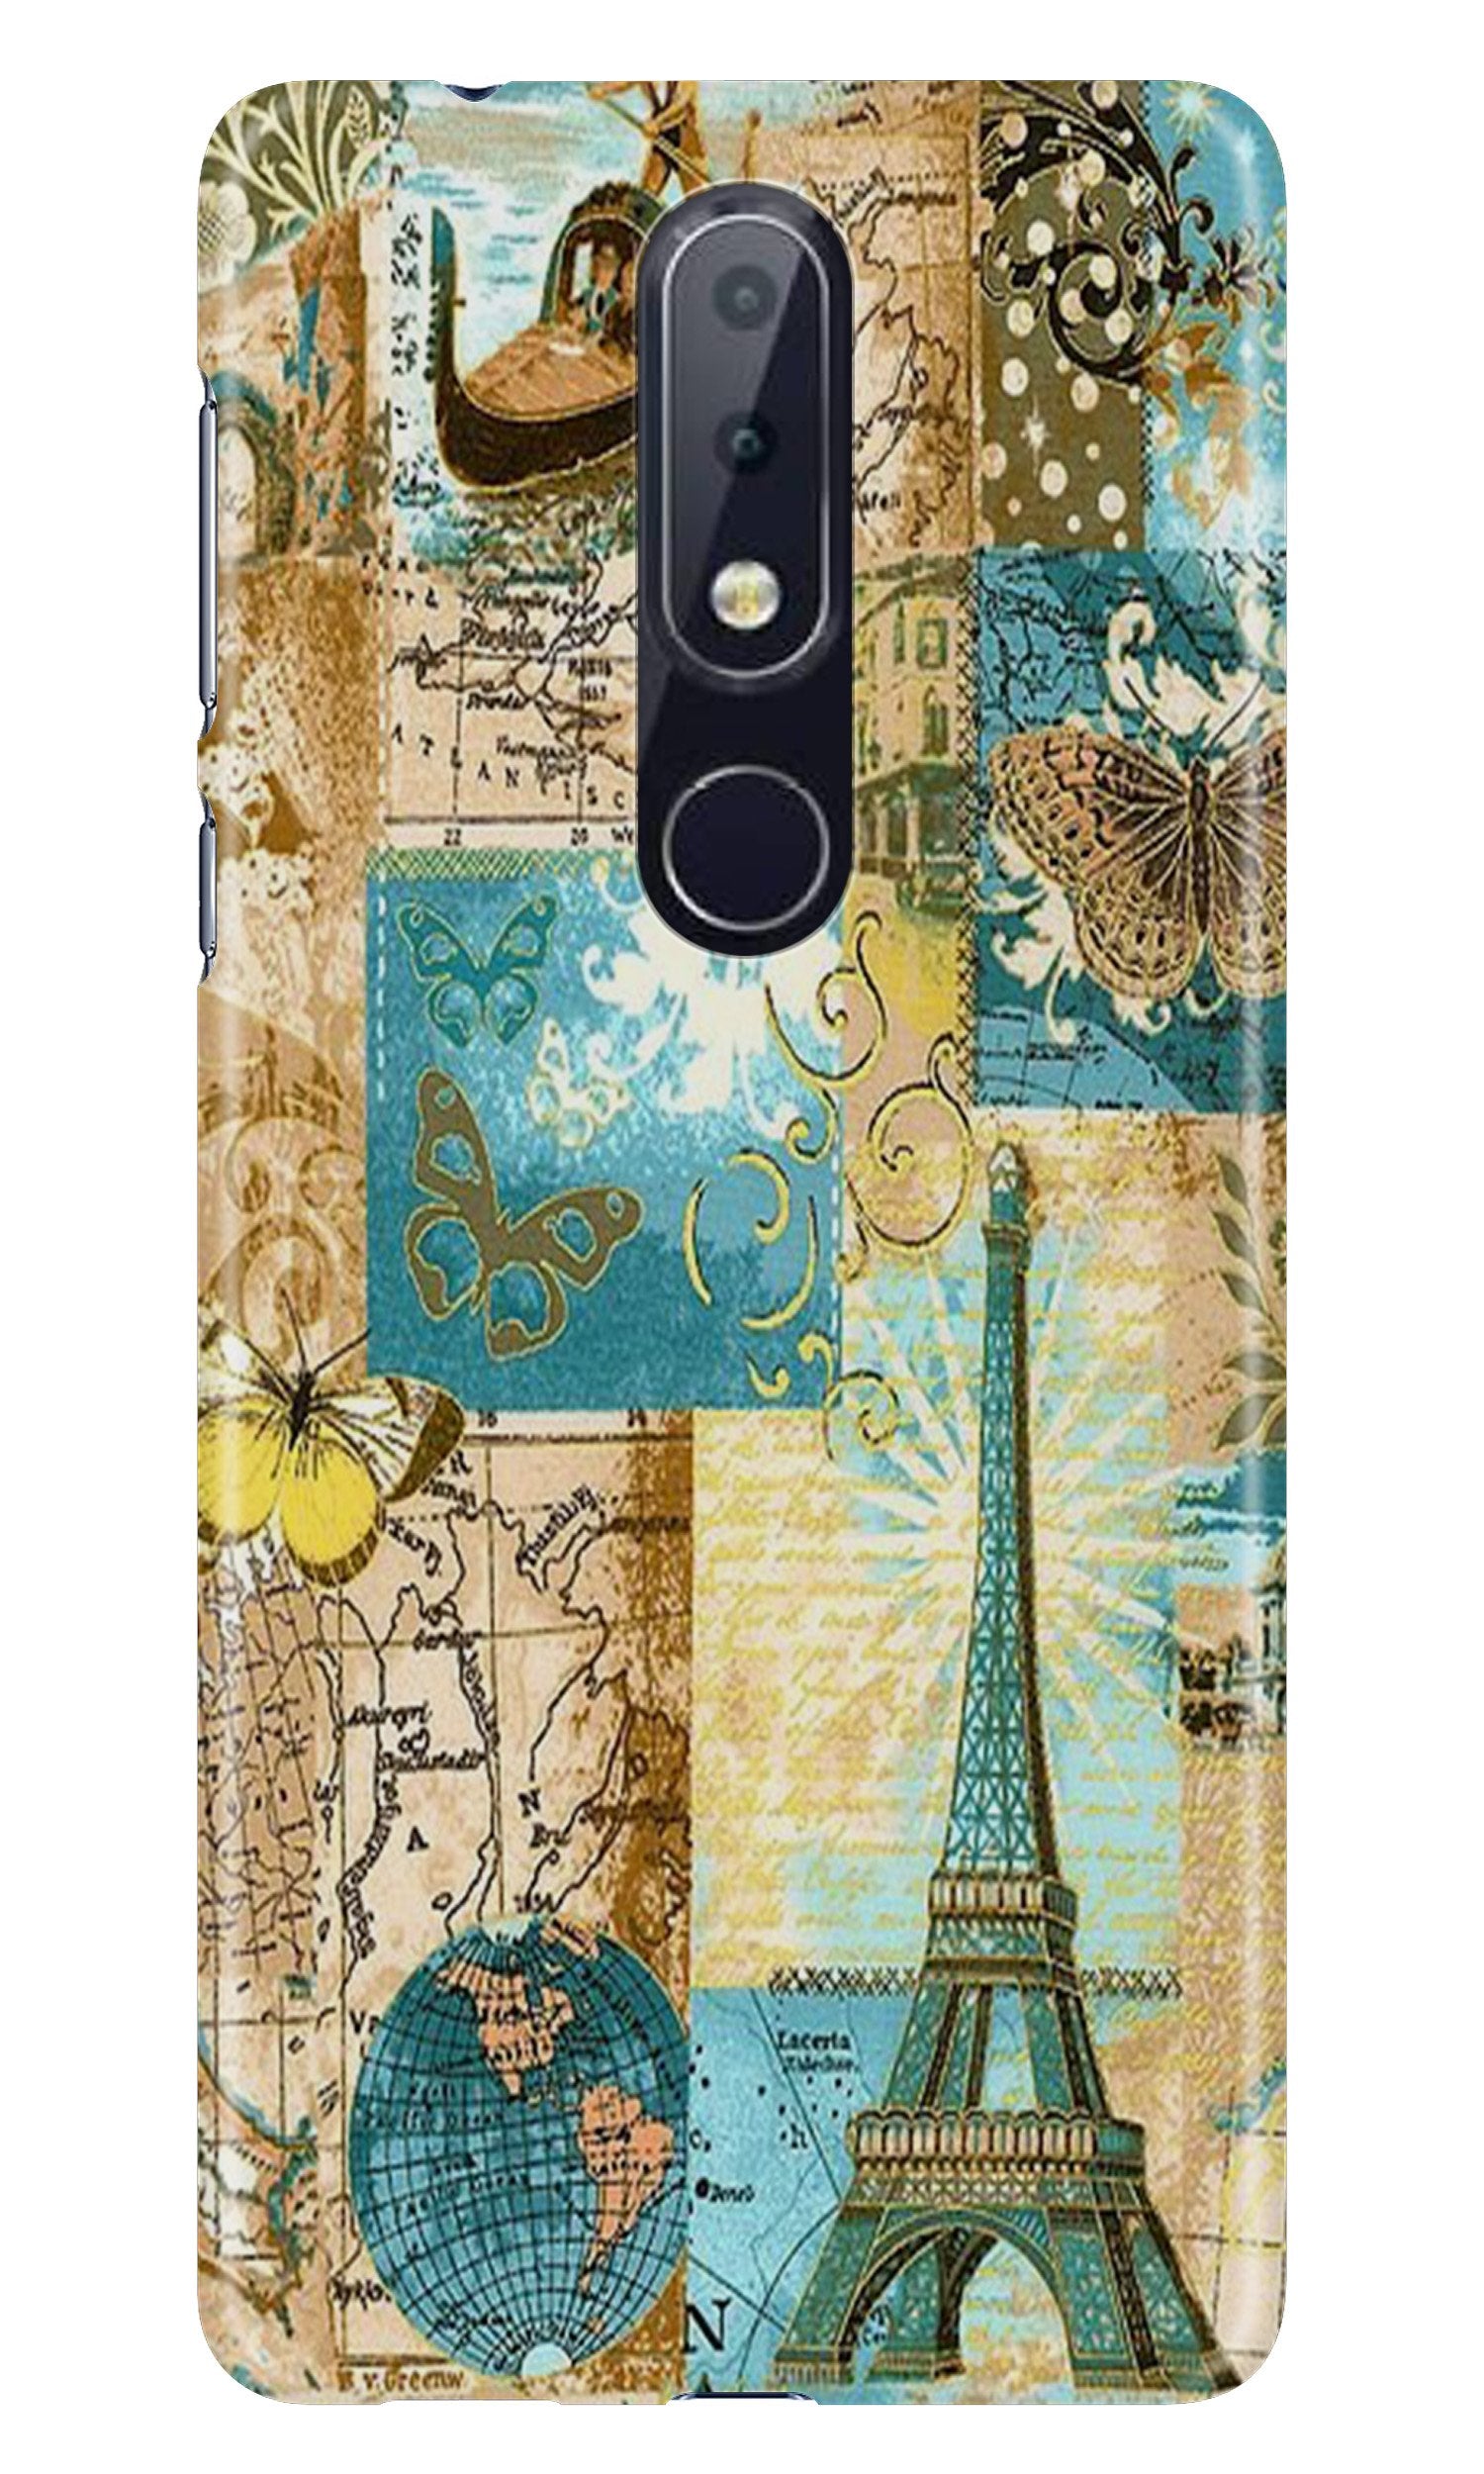 Travel Eiffel Tower  Case for Nokia 7.1 (Design No. 206)